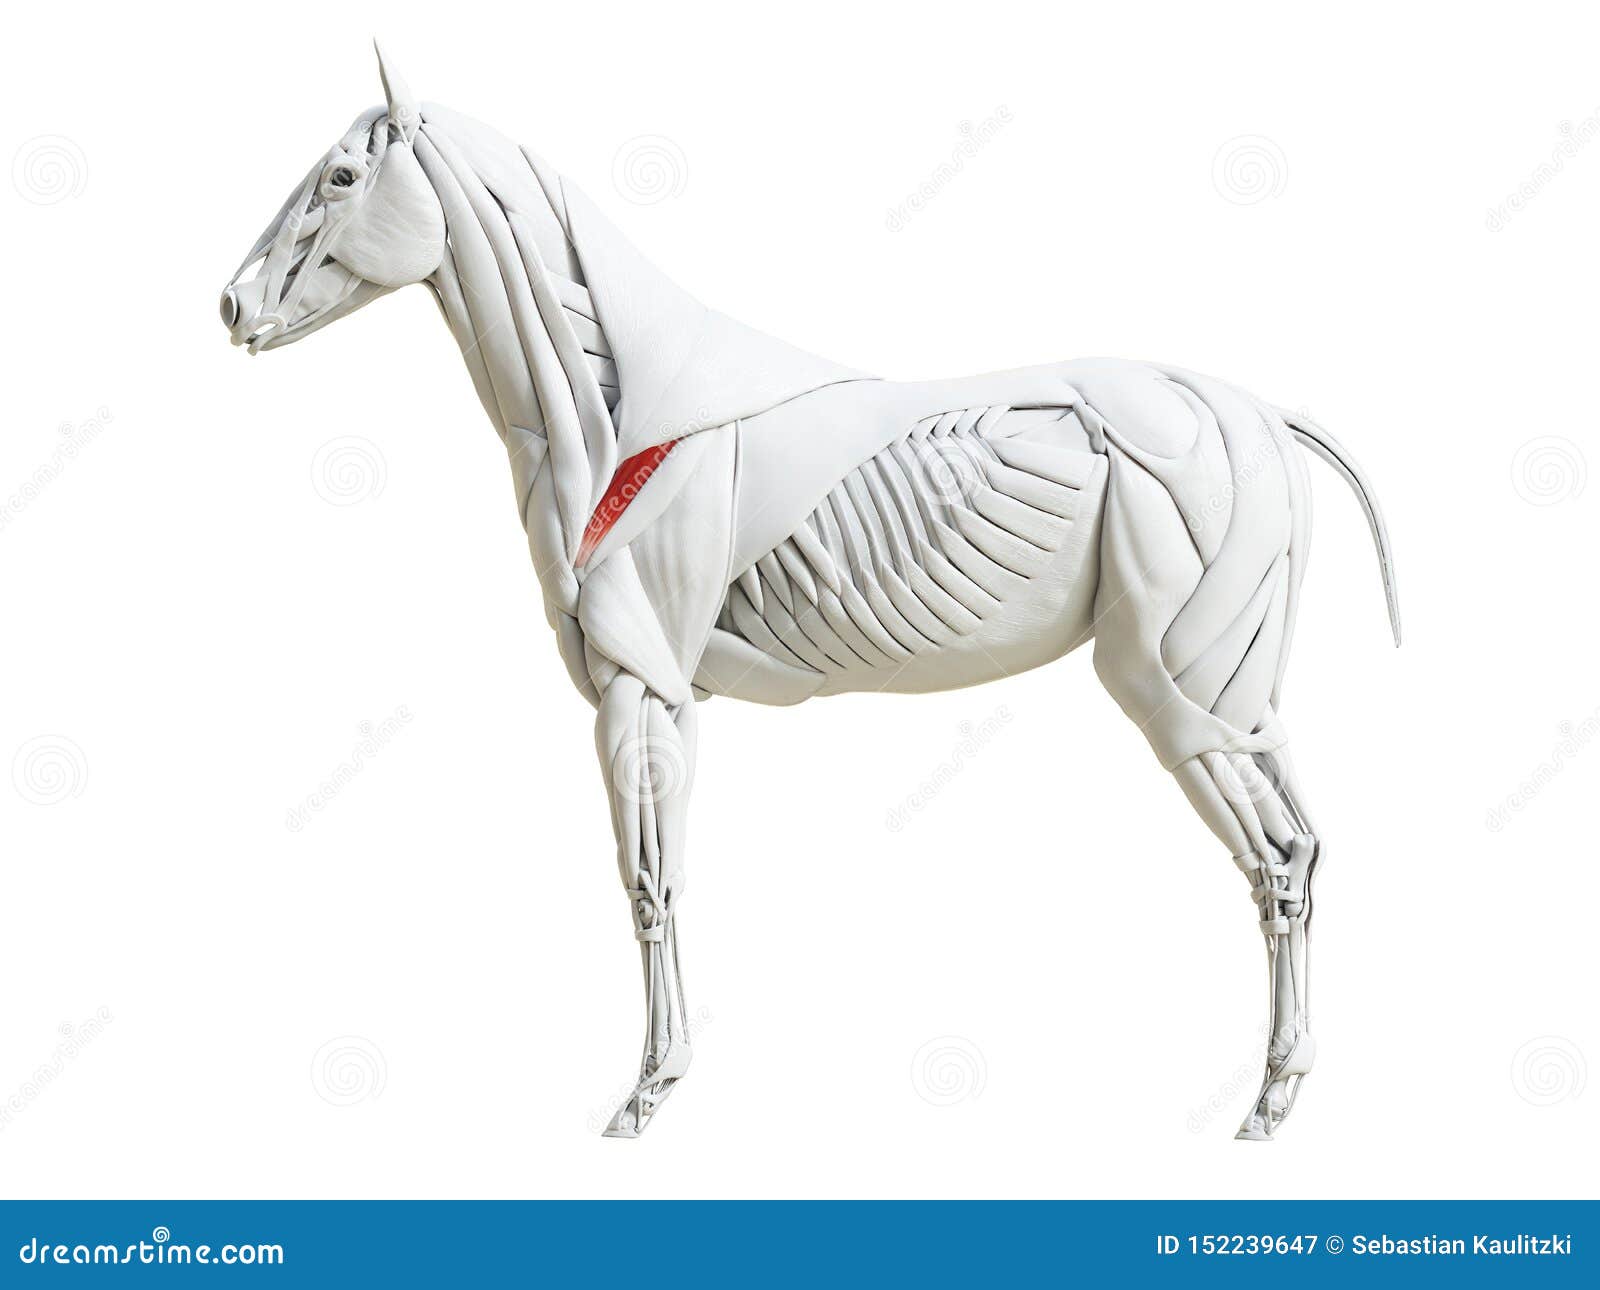 the equine muscle anatomy - infraspinatus